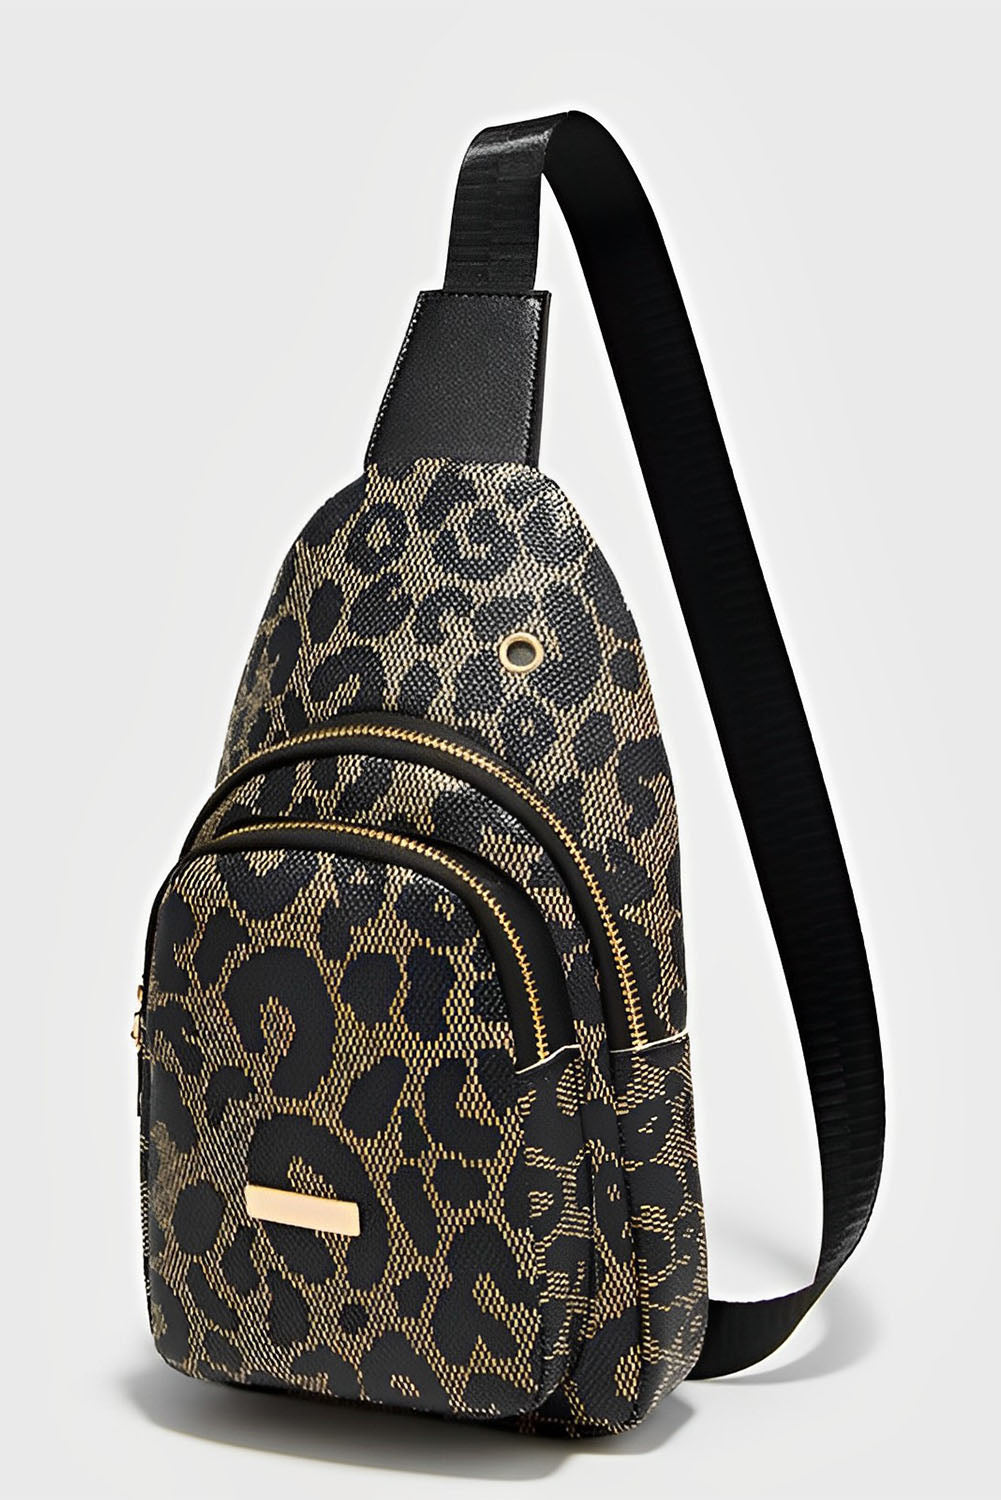 Leopard Print PU Sling Bag